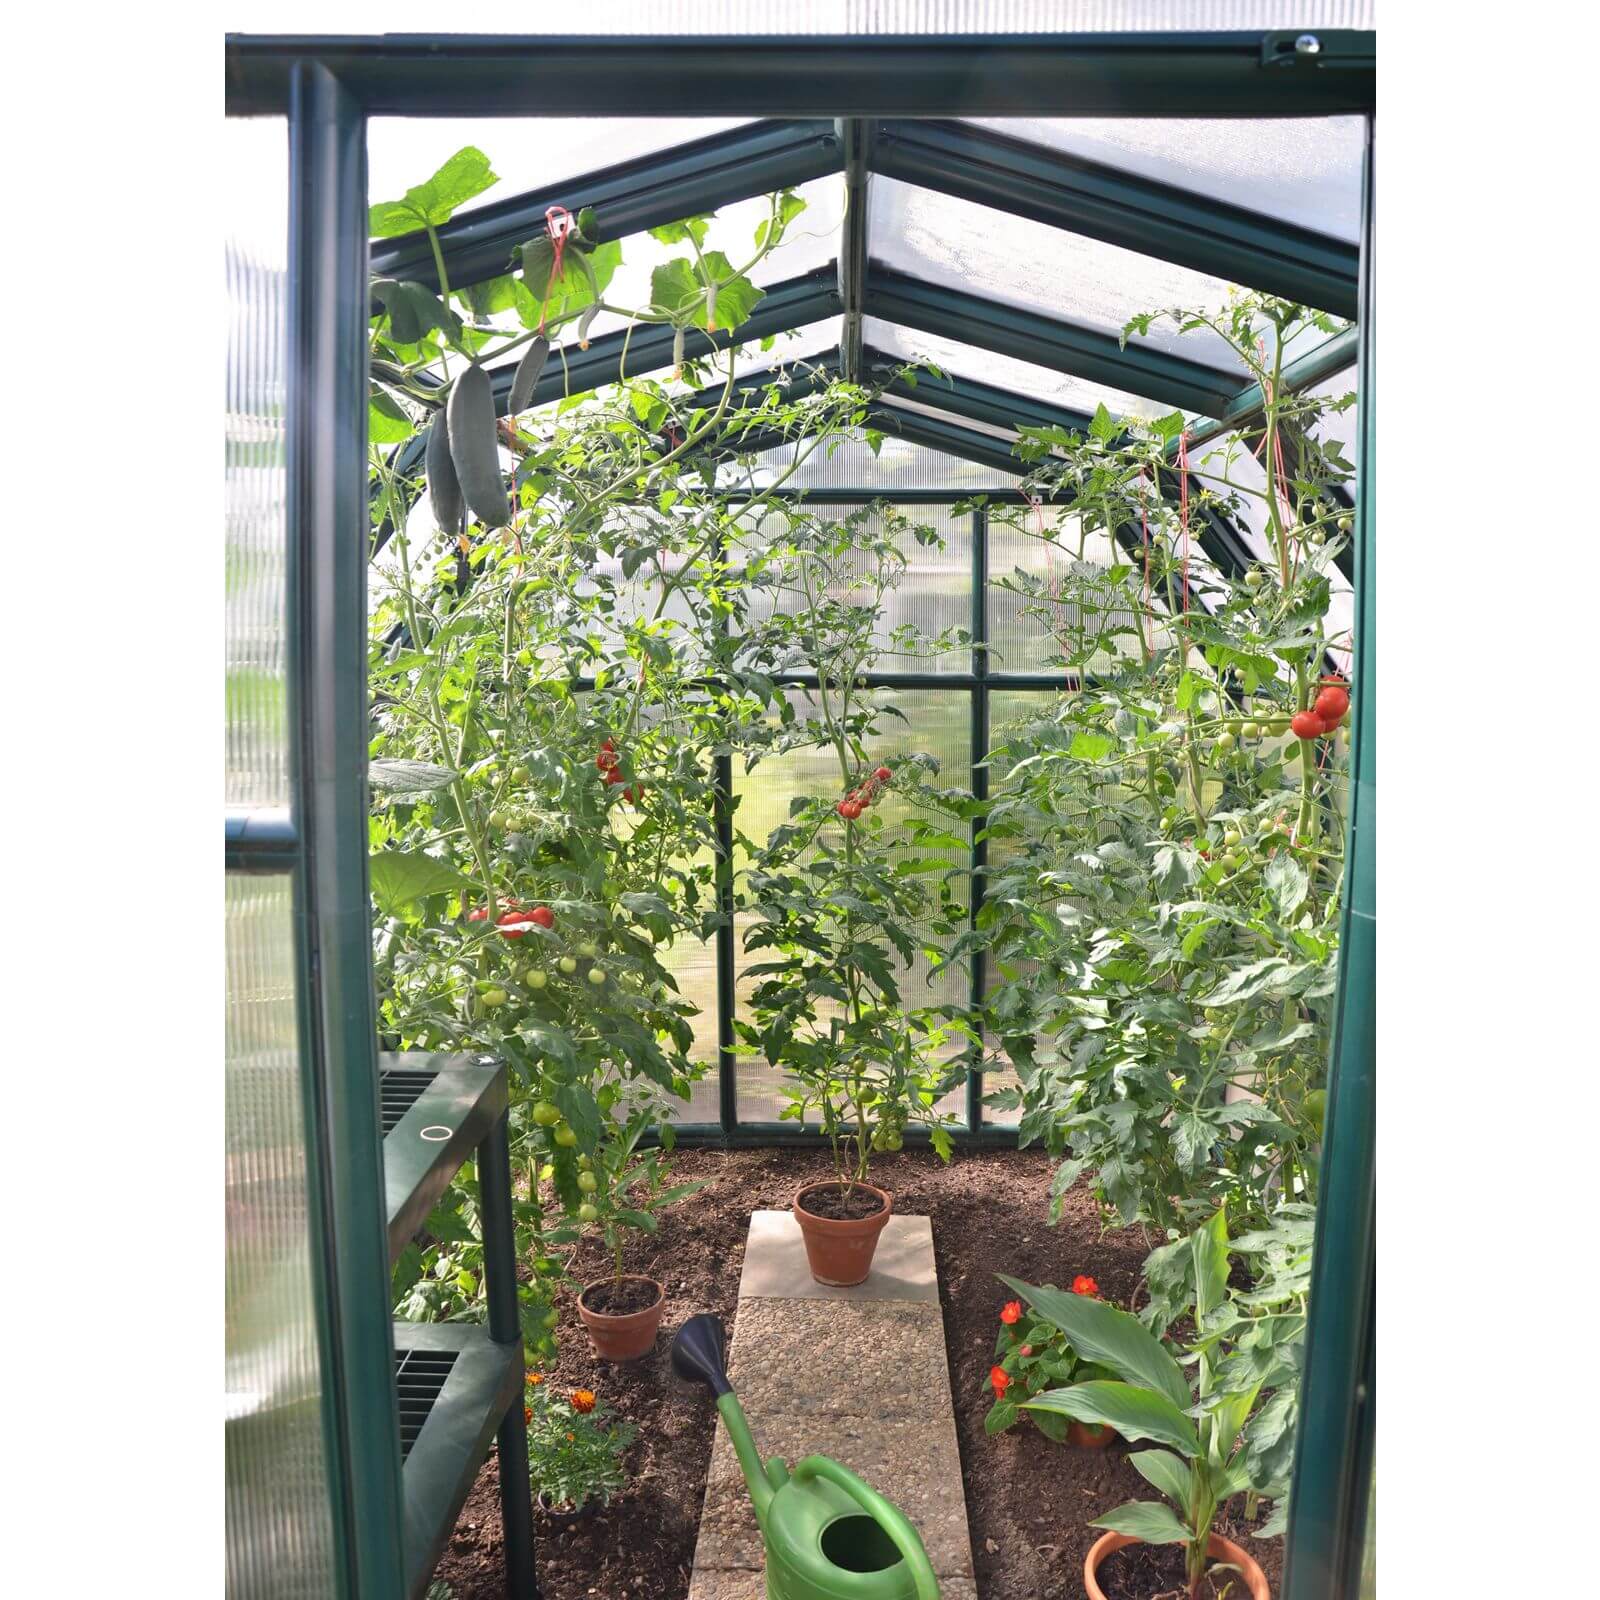 Palram 6 x 10ft Canopia Eco Grow Greenhouse - Green